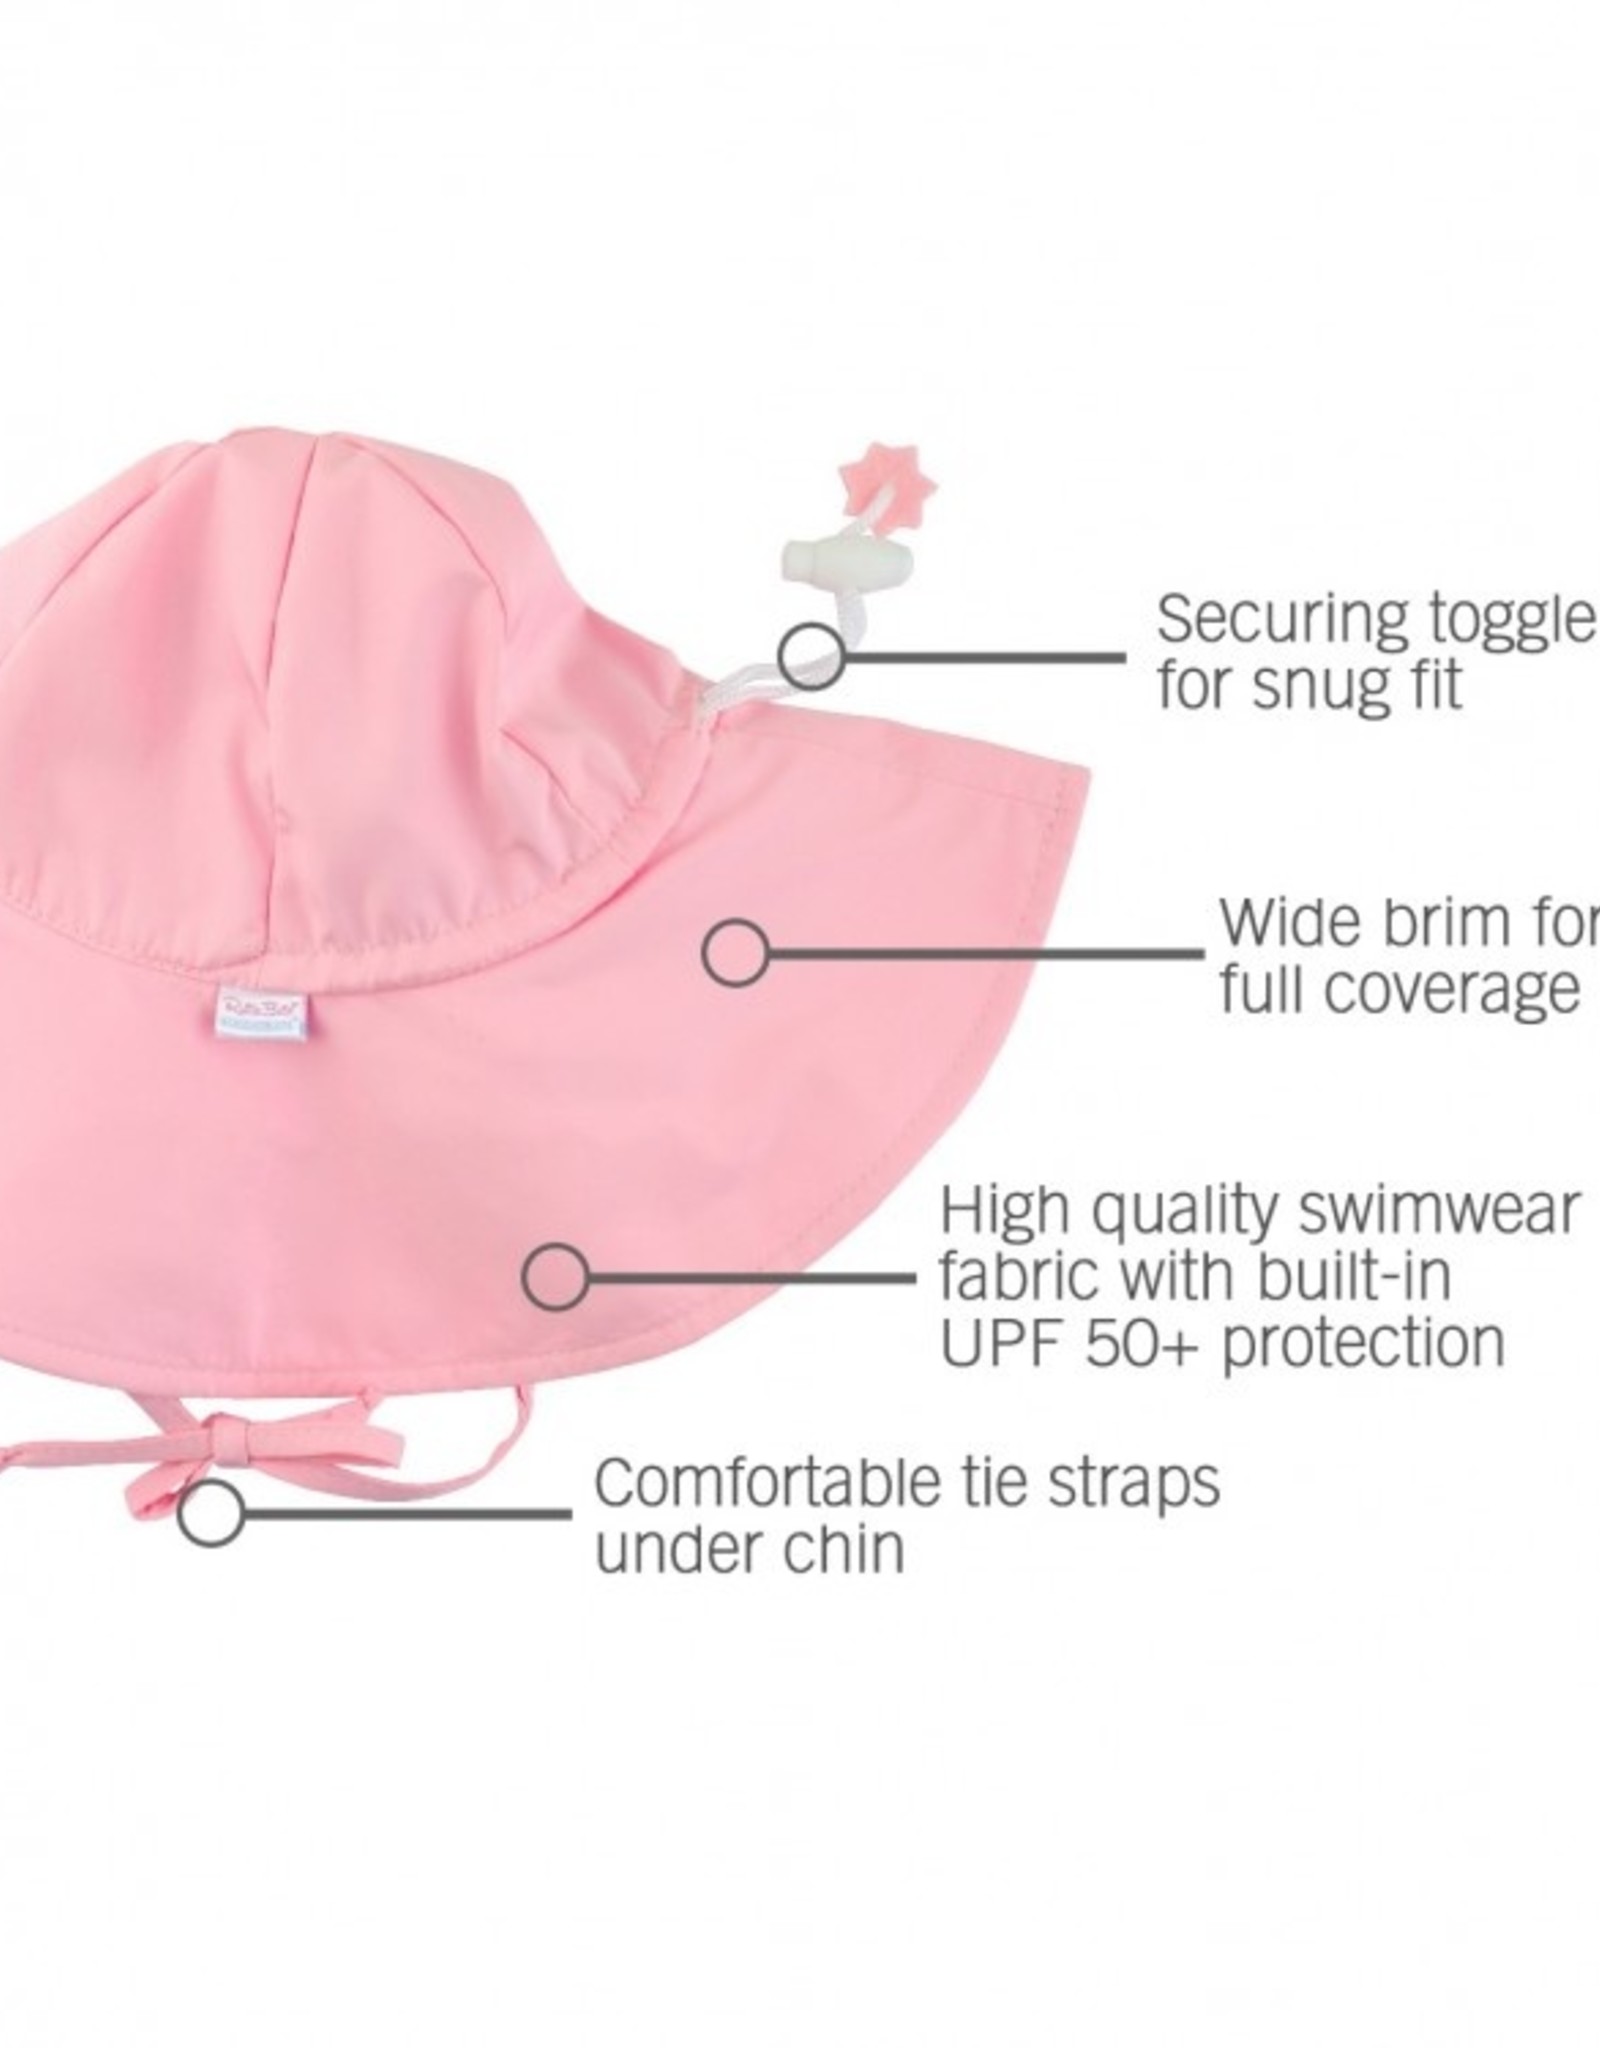 RuffleButts Pink Sun Hat